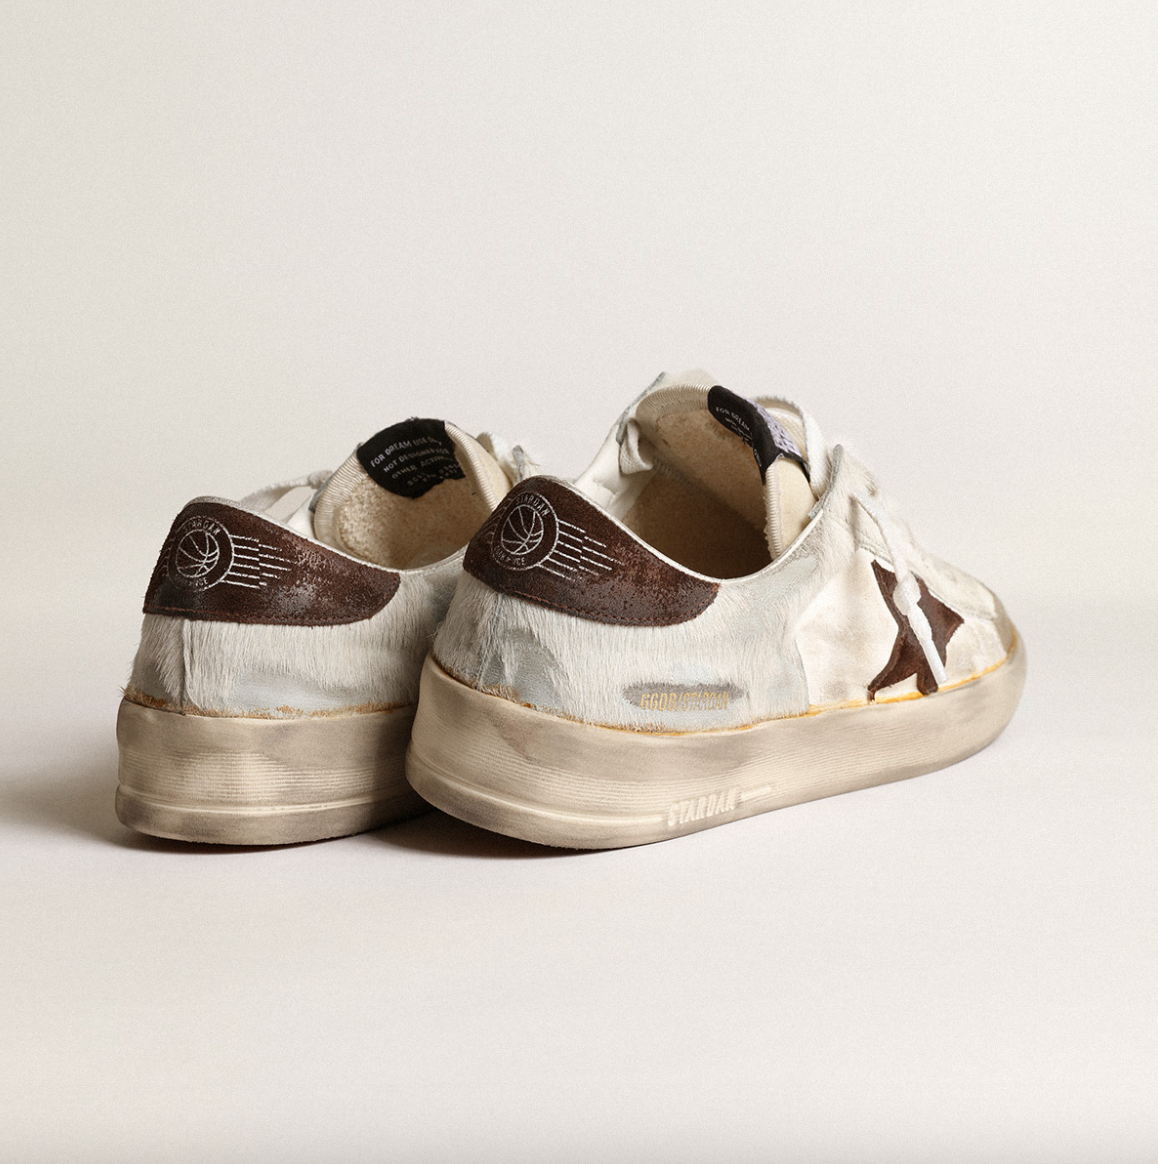 Men's Stardan Sneaker - White/Gray/Brown